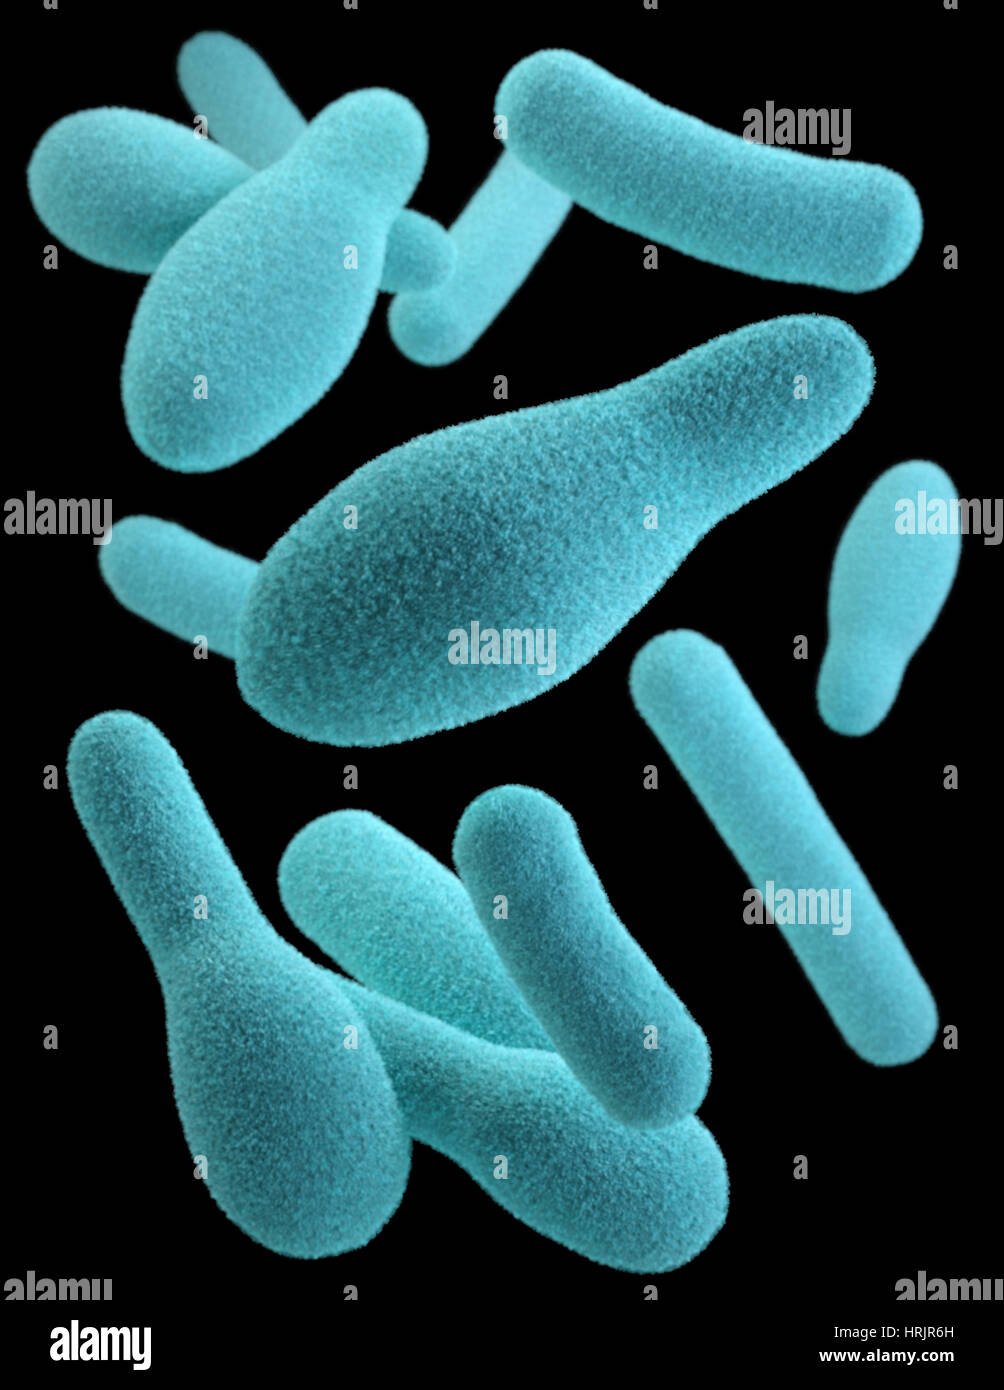 Clostridium, 3D Model Stock Photo